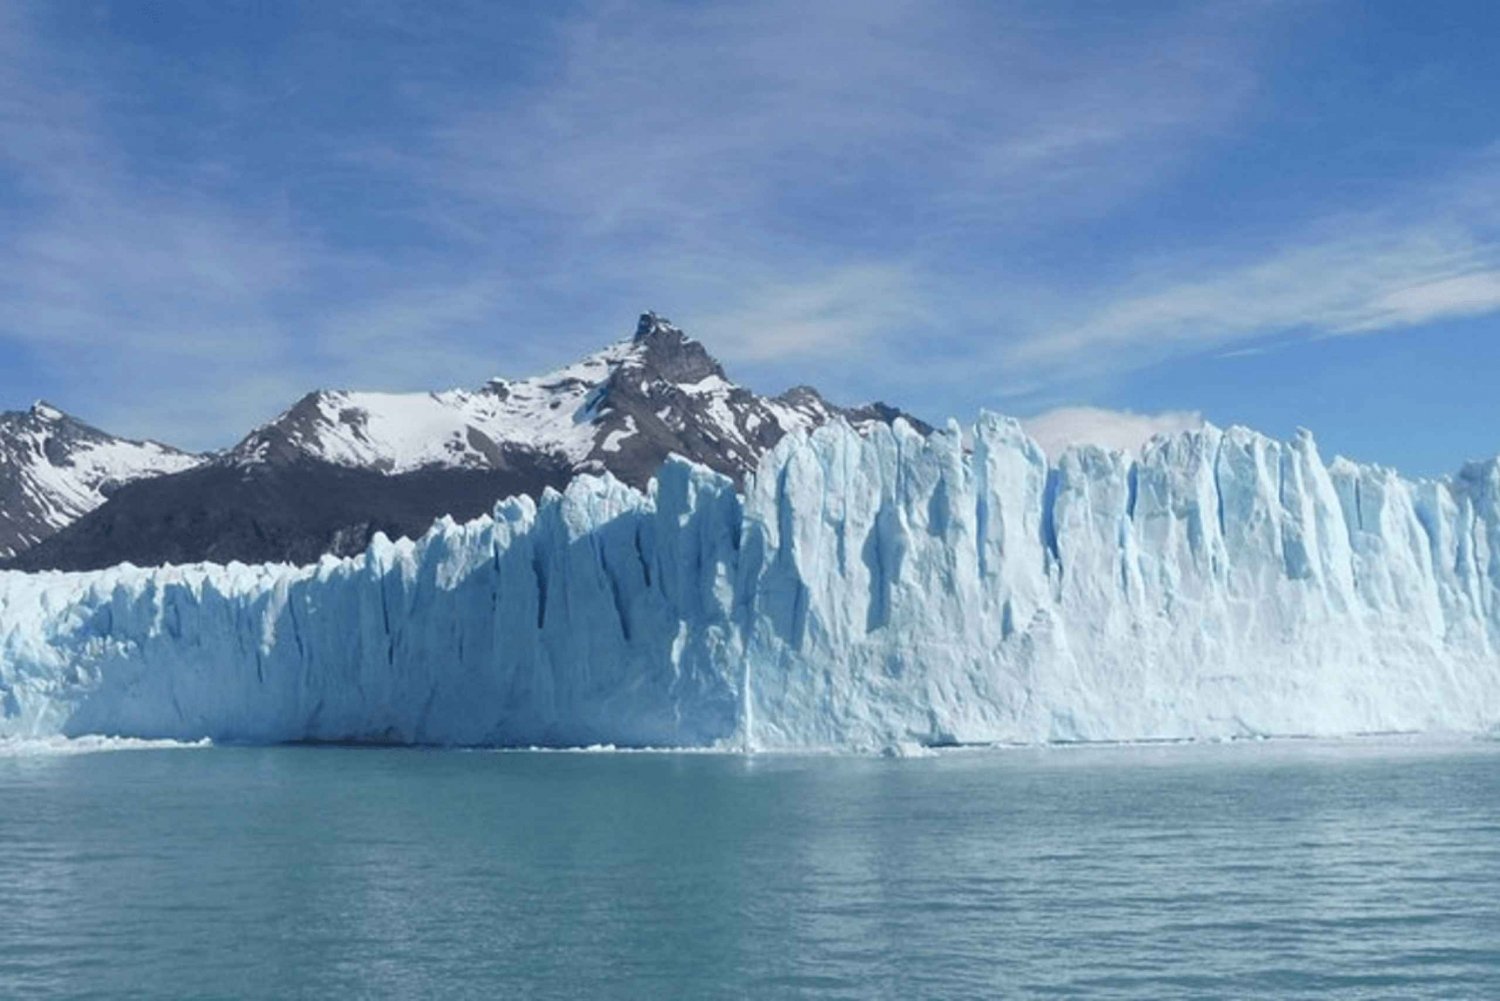 El Calafate: Perito Moreno gletsjer dagtocht met gids & zeilen